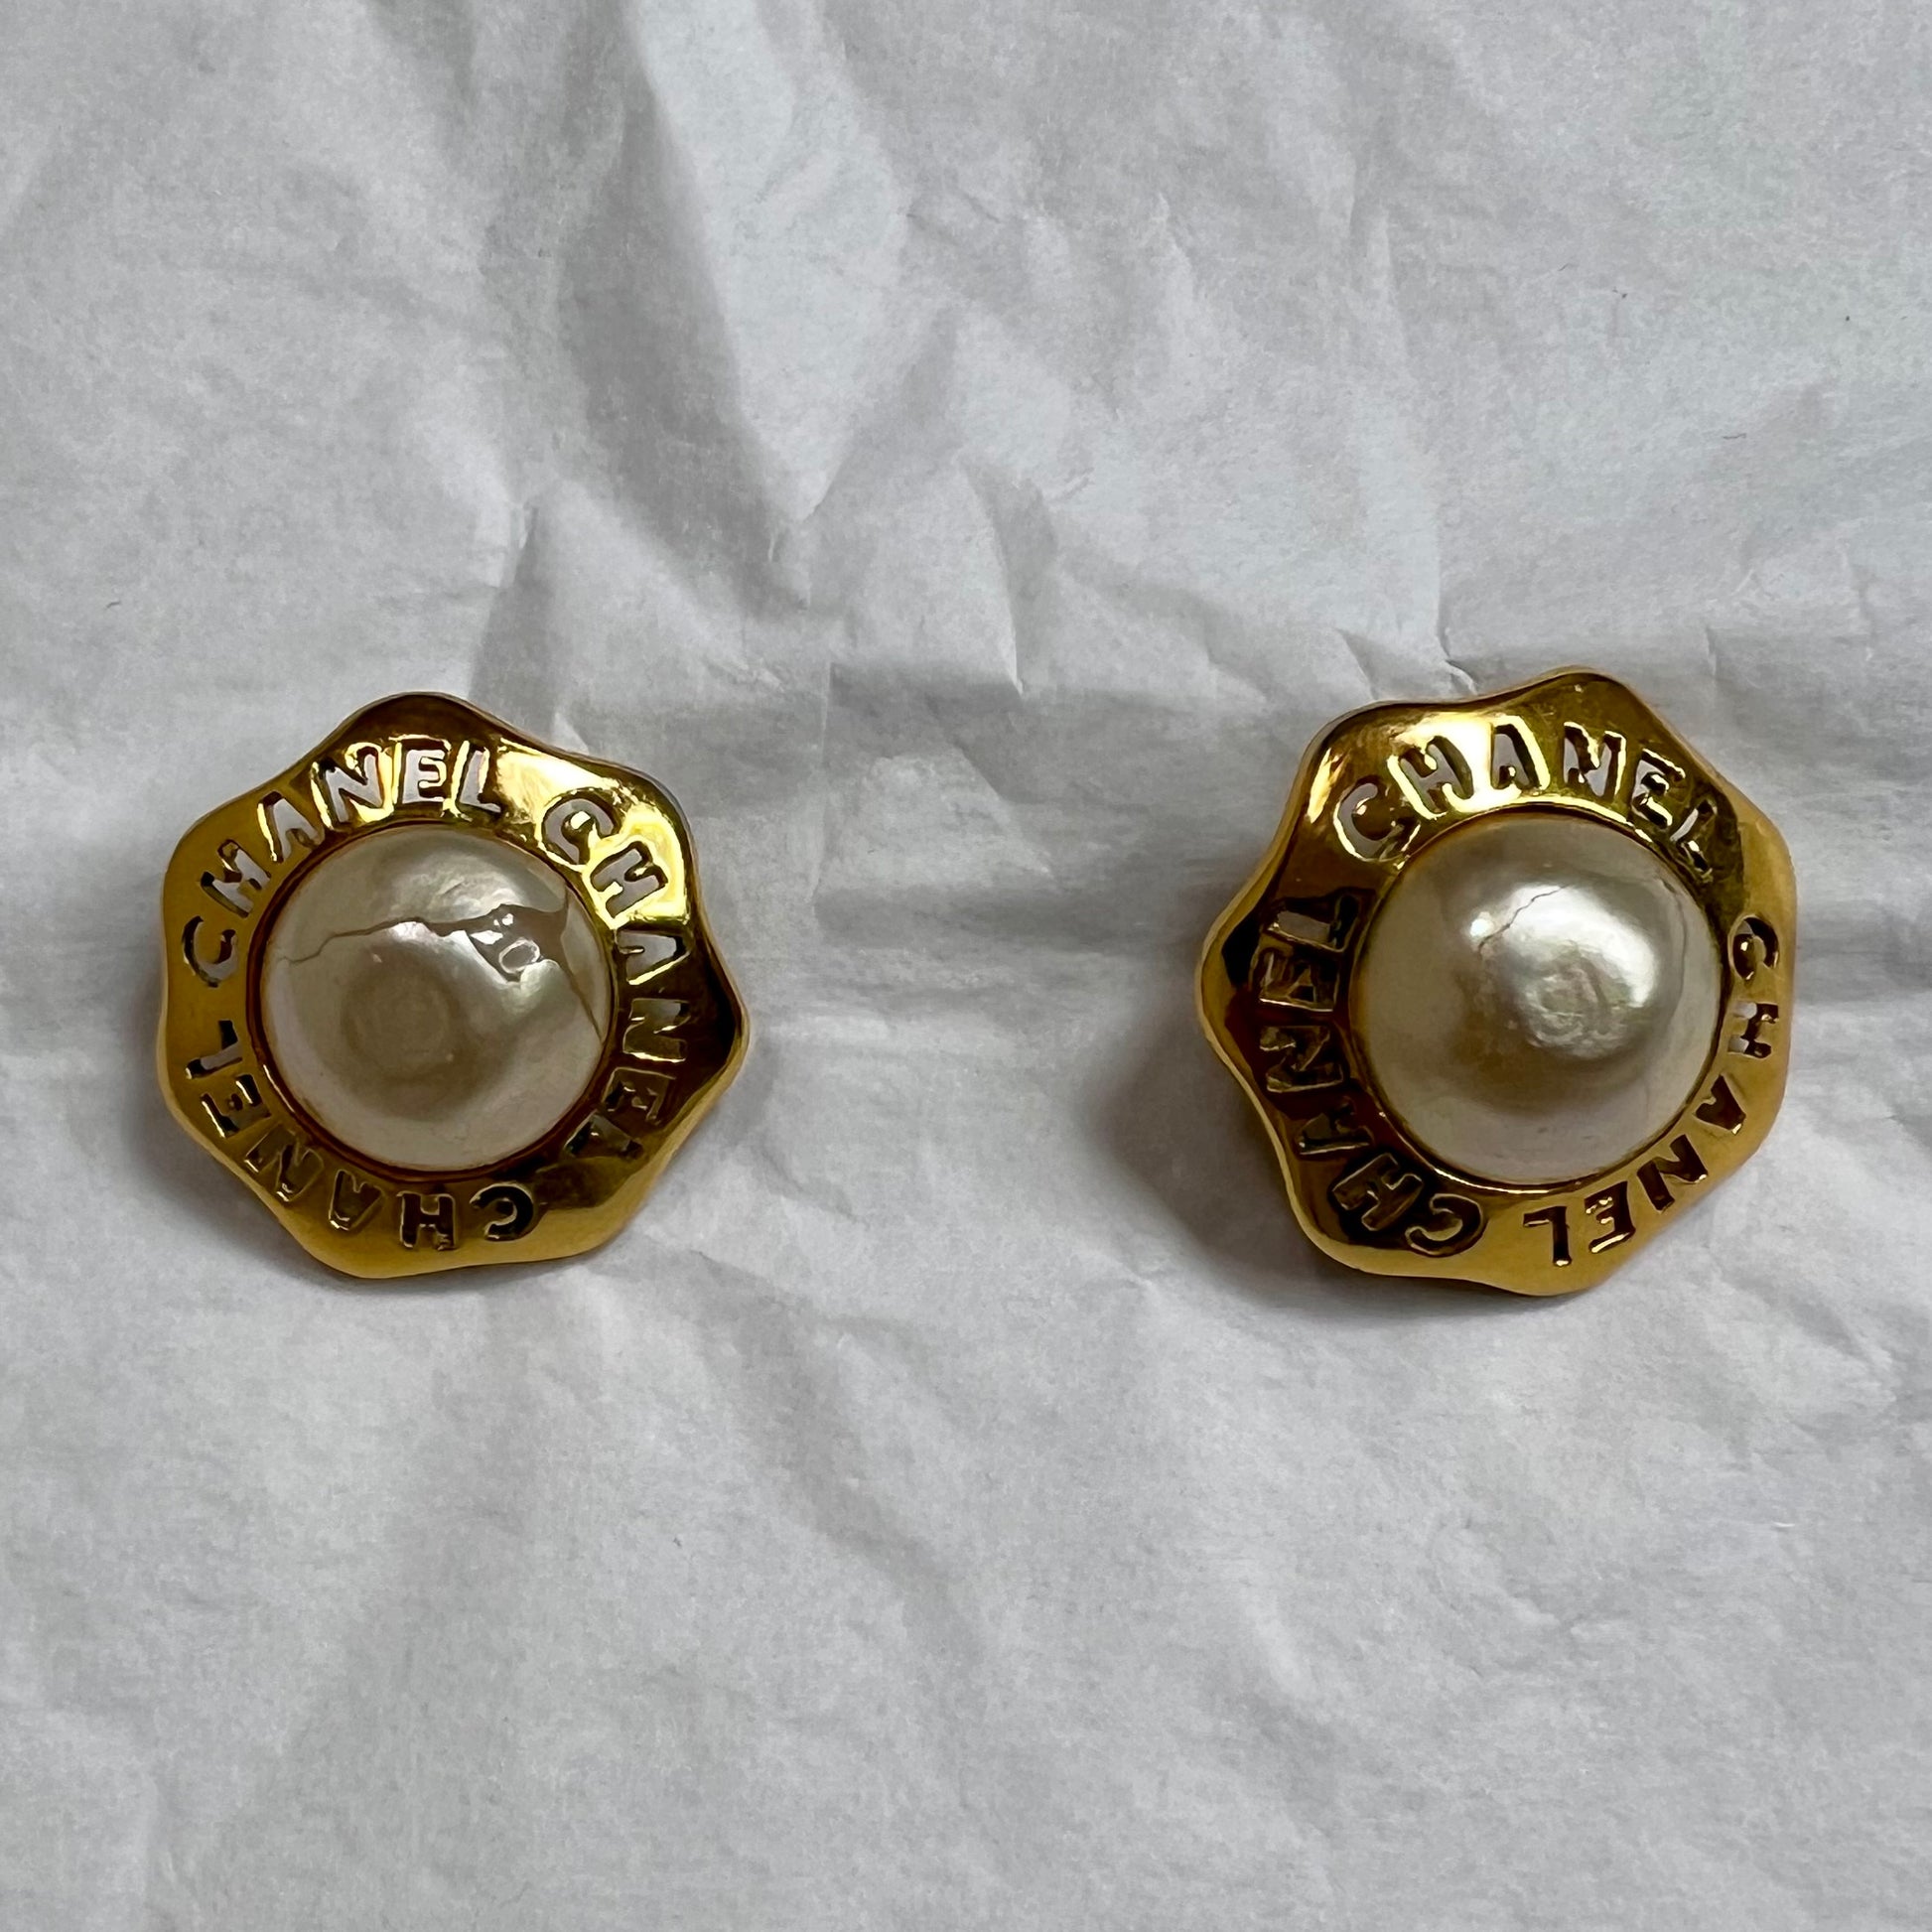 Vintage Chanel Gold Turnlock Earrings